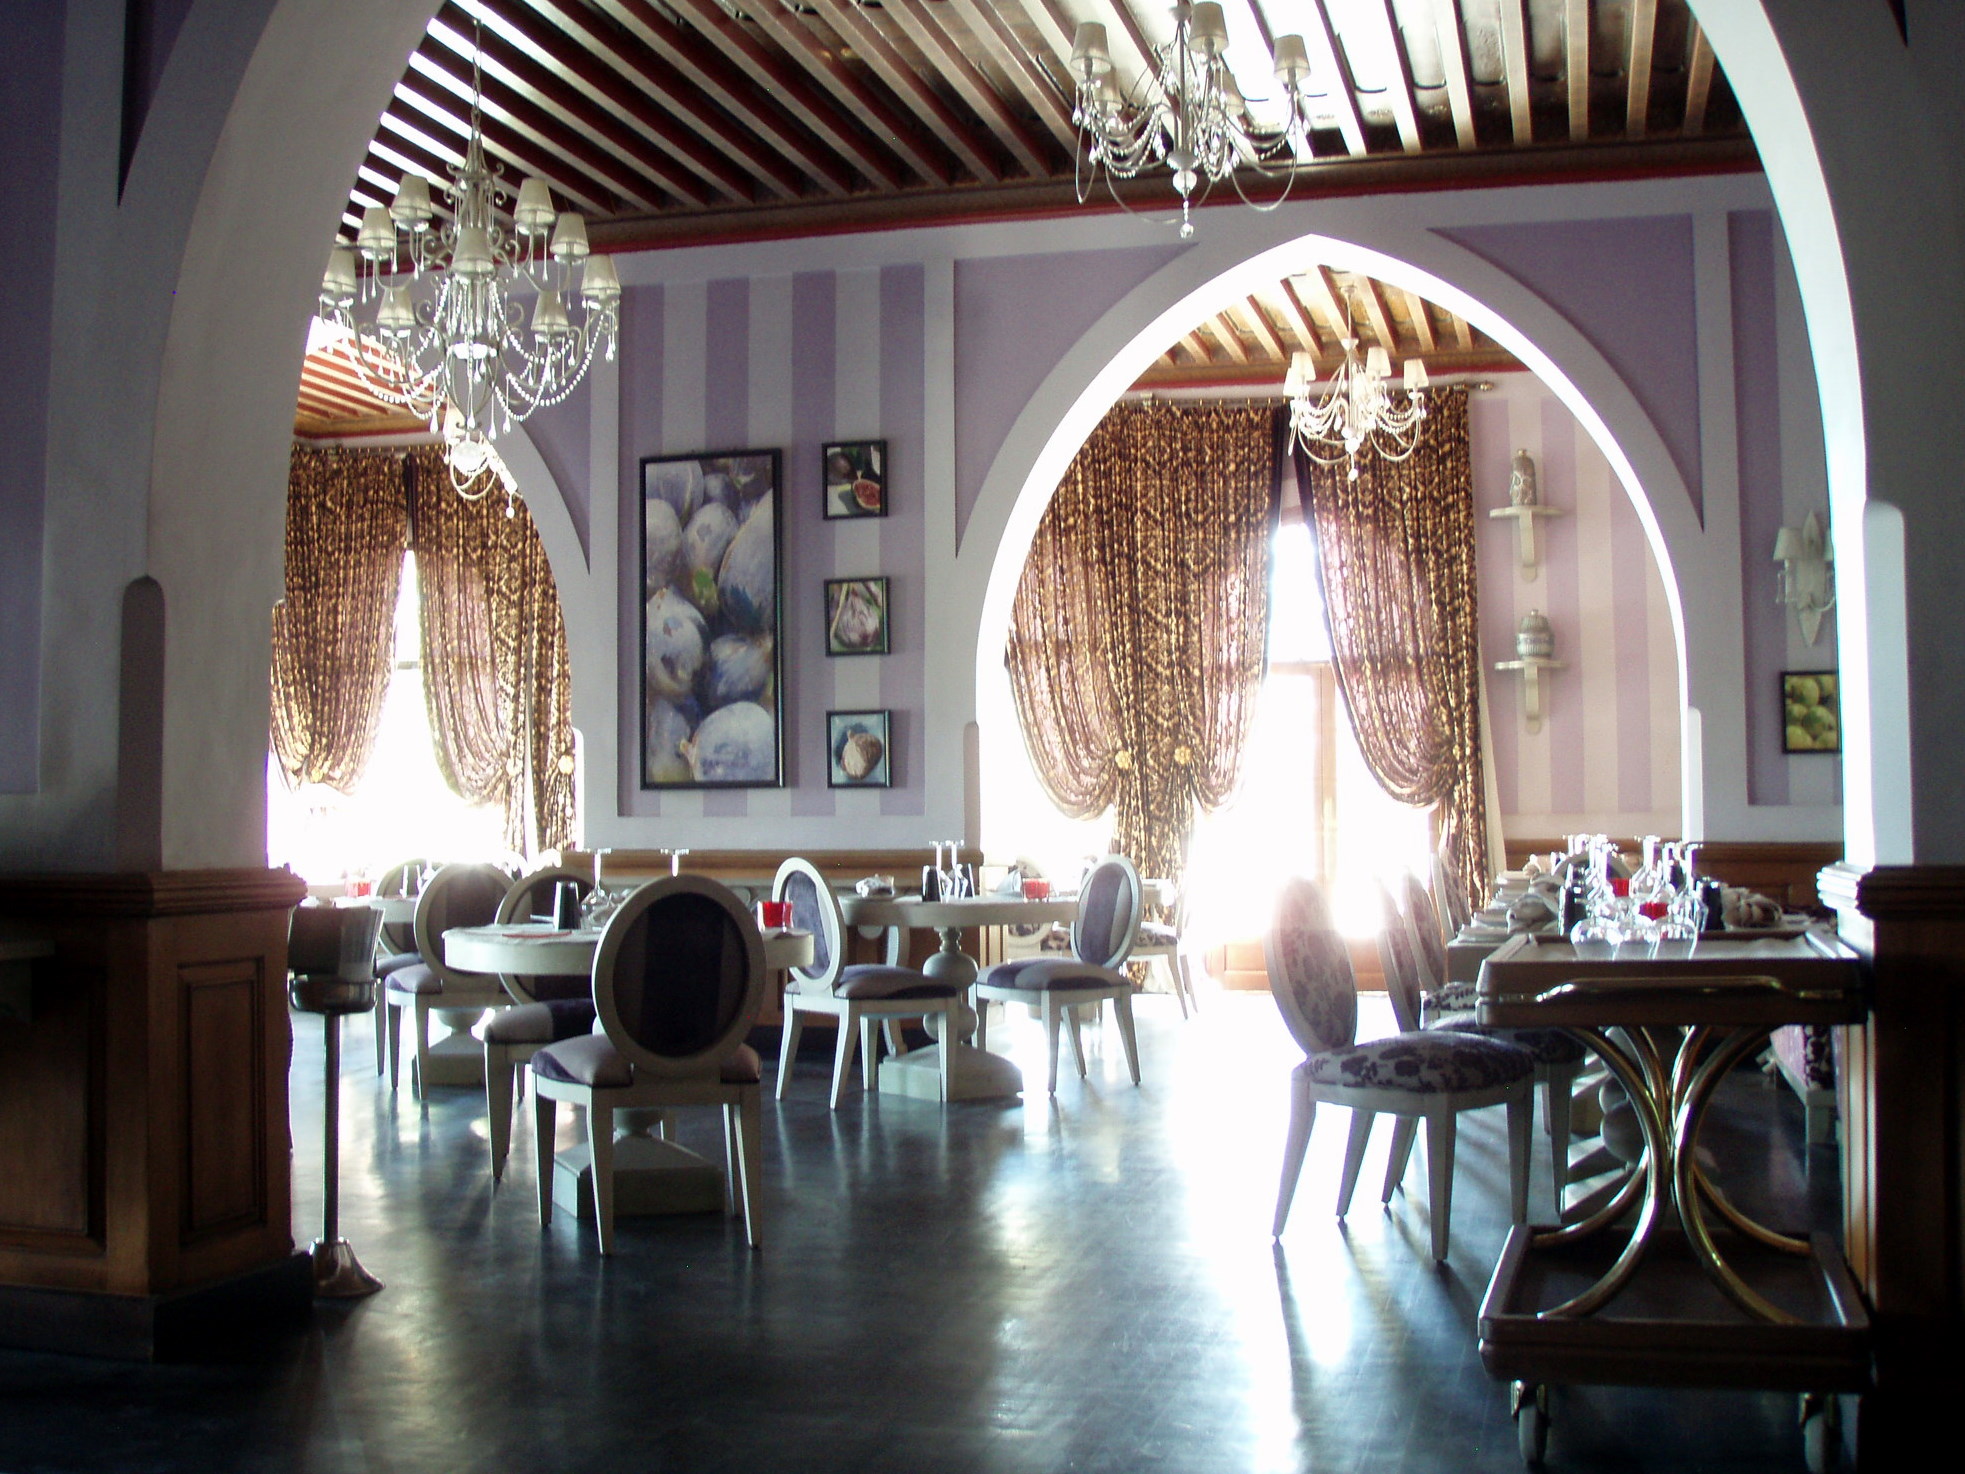 El-Karmoussa Moroccan Restaurant at Golf Club House in Palmeraie, Marrakech